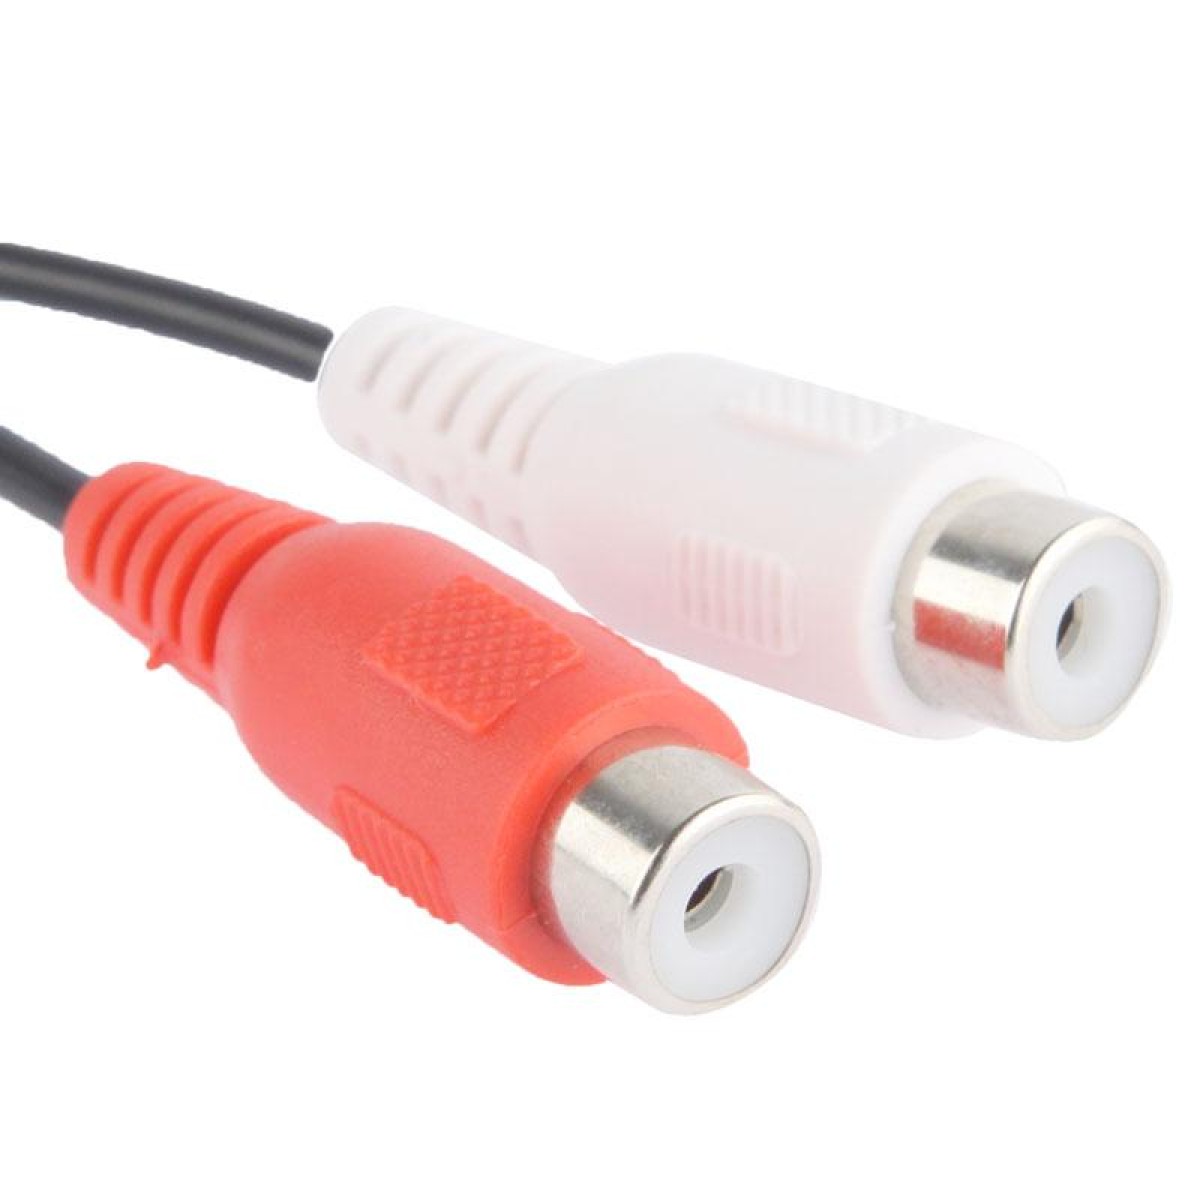 2 RCA AV Female To 1 RCA Male Y Splitter Video Cable Adapter, Length: 26.5cm